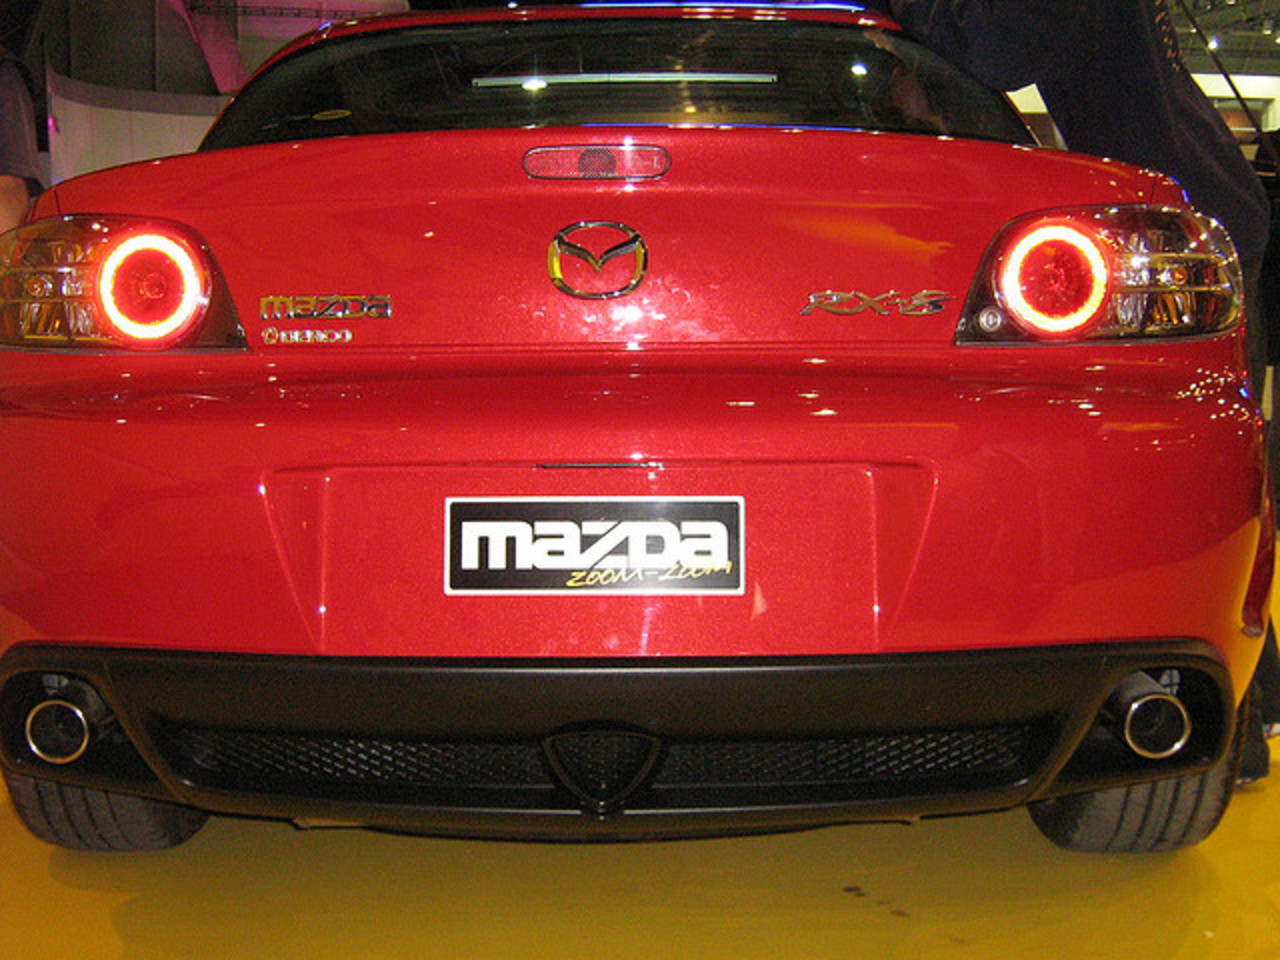 Salon del Automovil // Mazda RX-5 | Flickr - Photo Sharing!